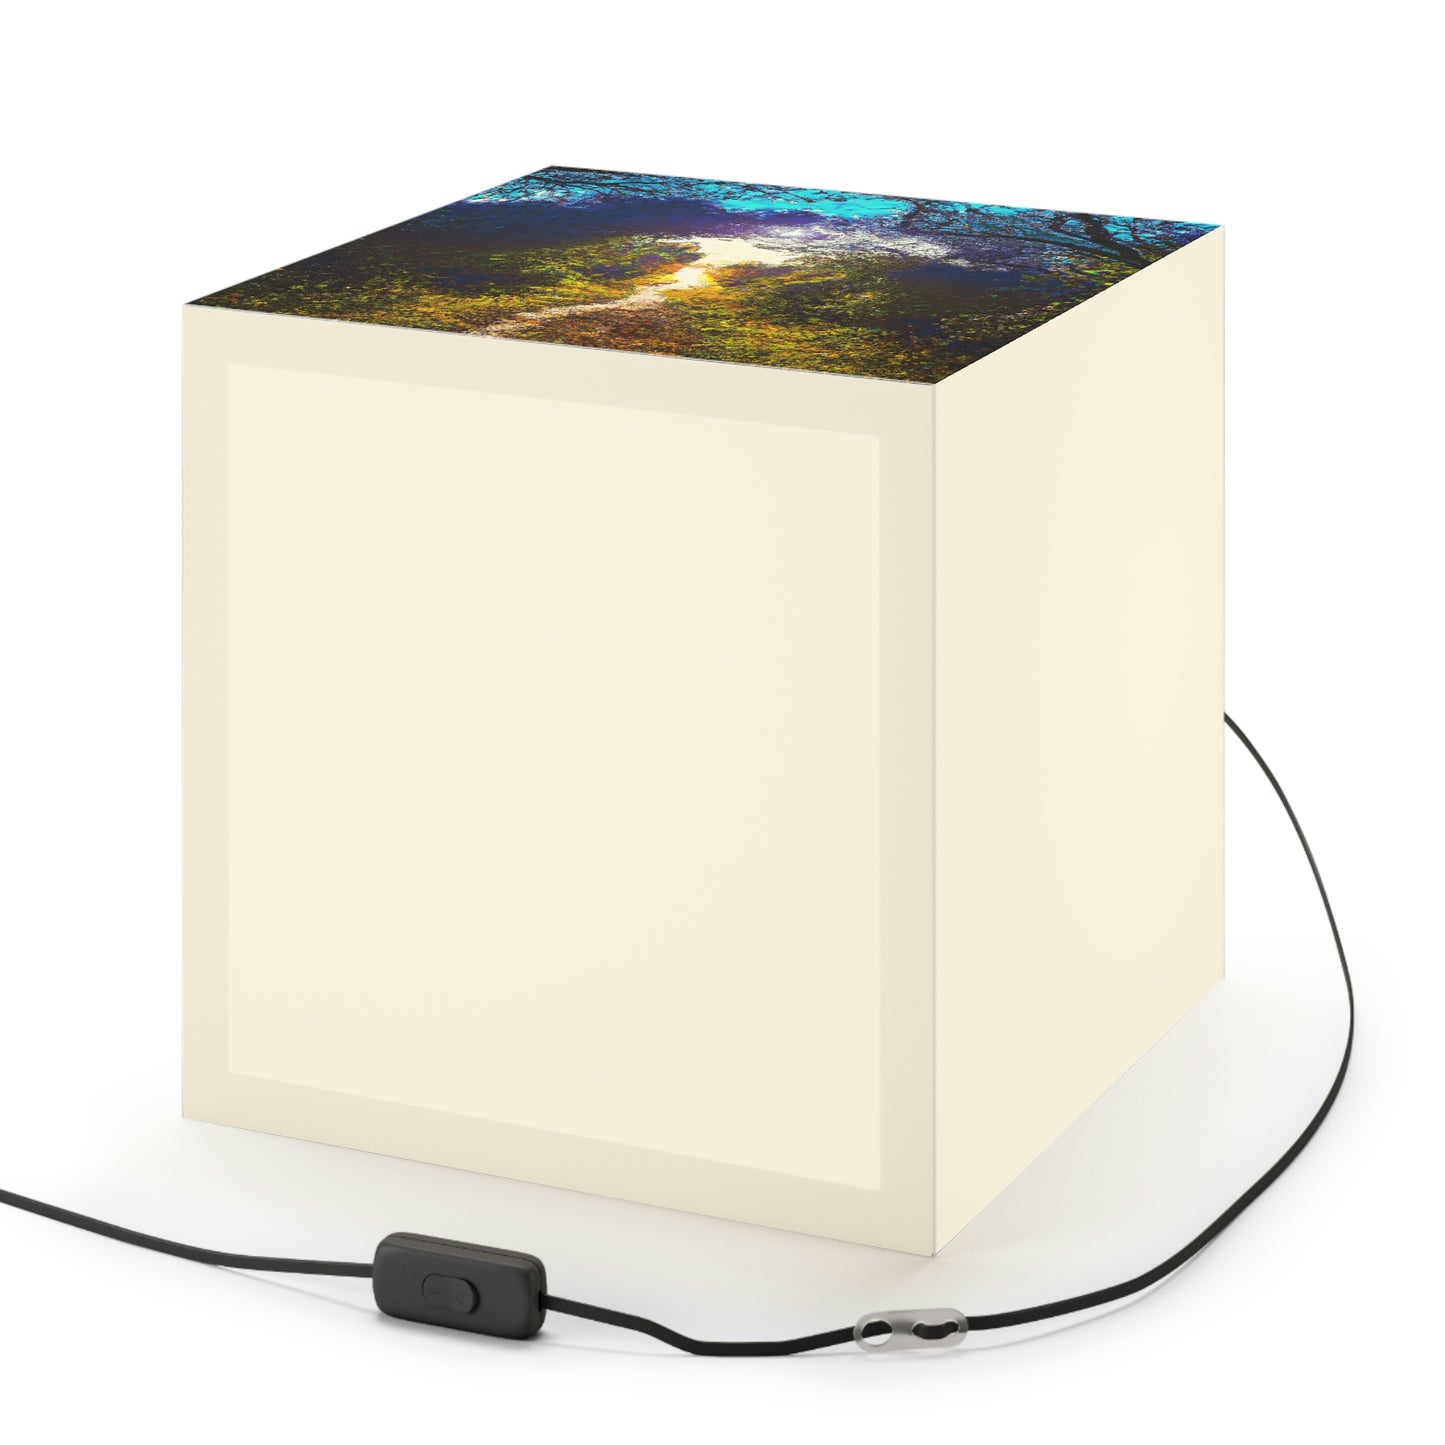 "A Beam of Light on a Forgotten Path" - The Alien Light Cube Lamp